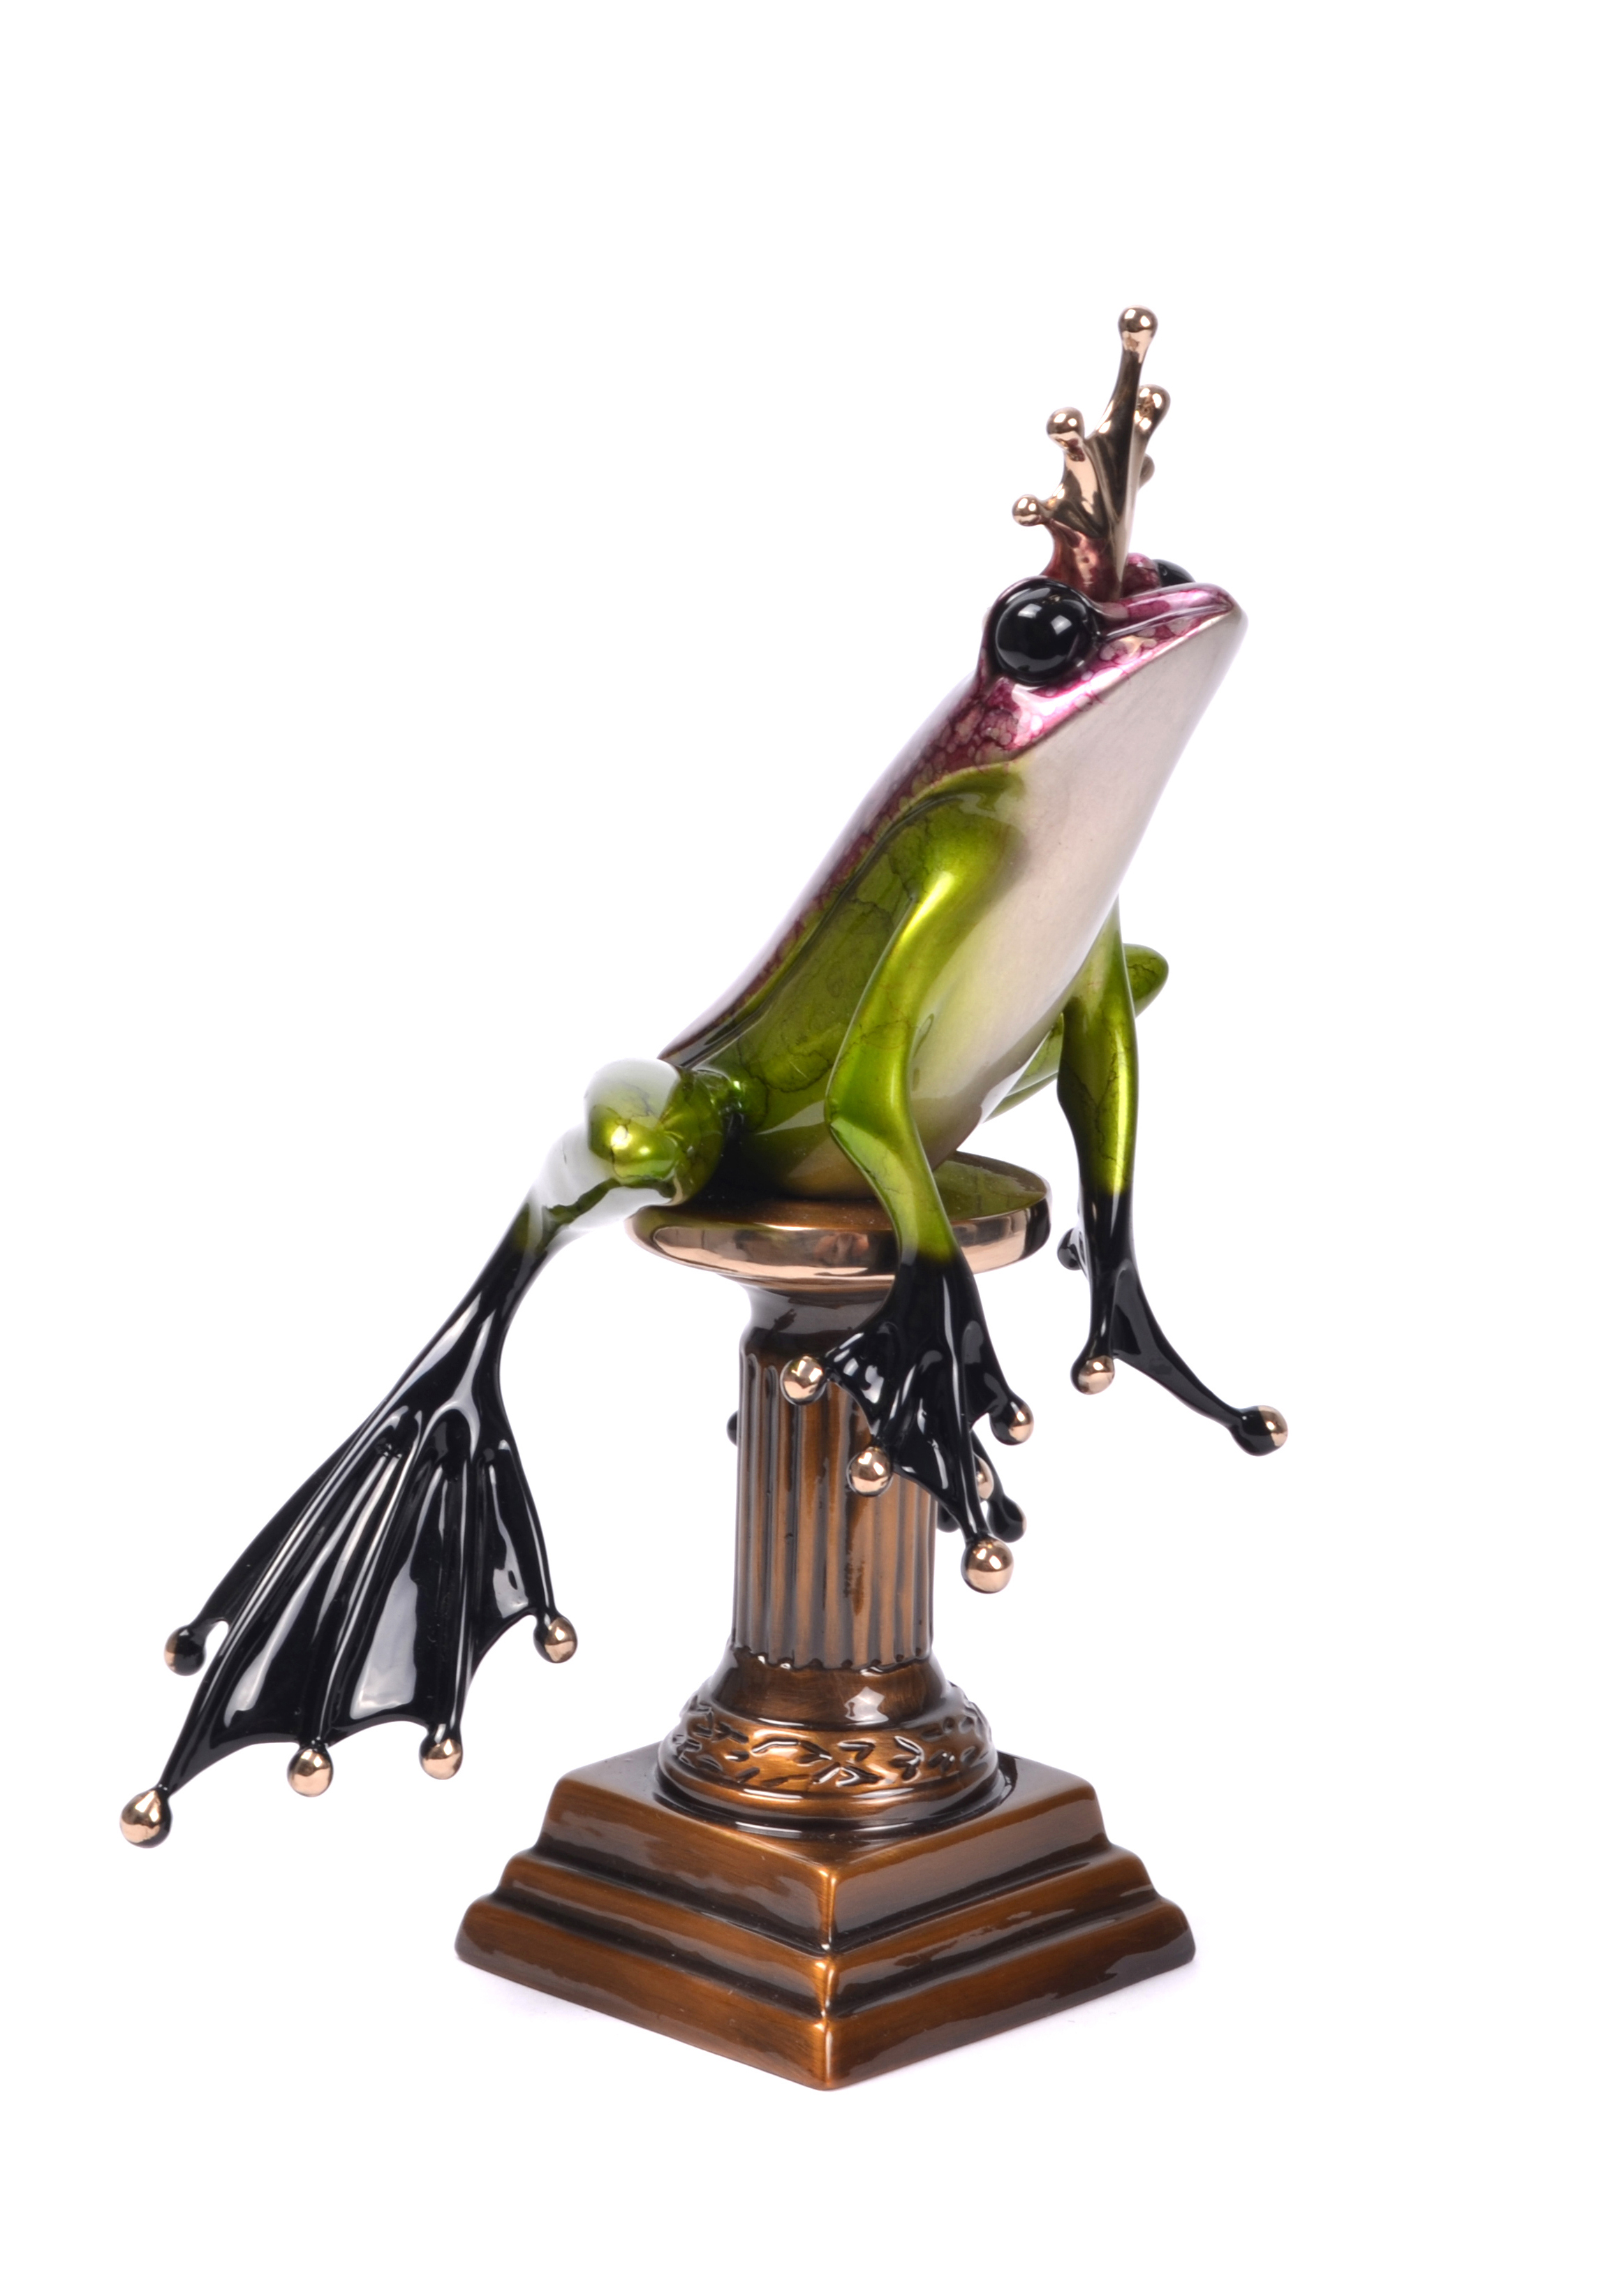 Signed, limited edition bronze frog princess sculpture